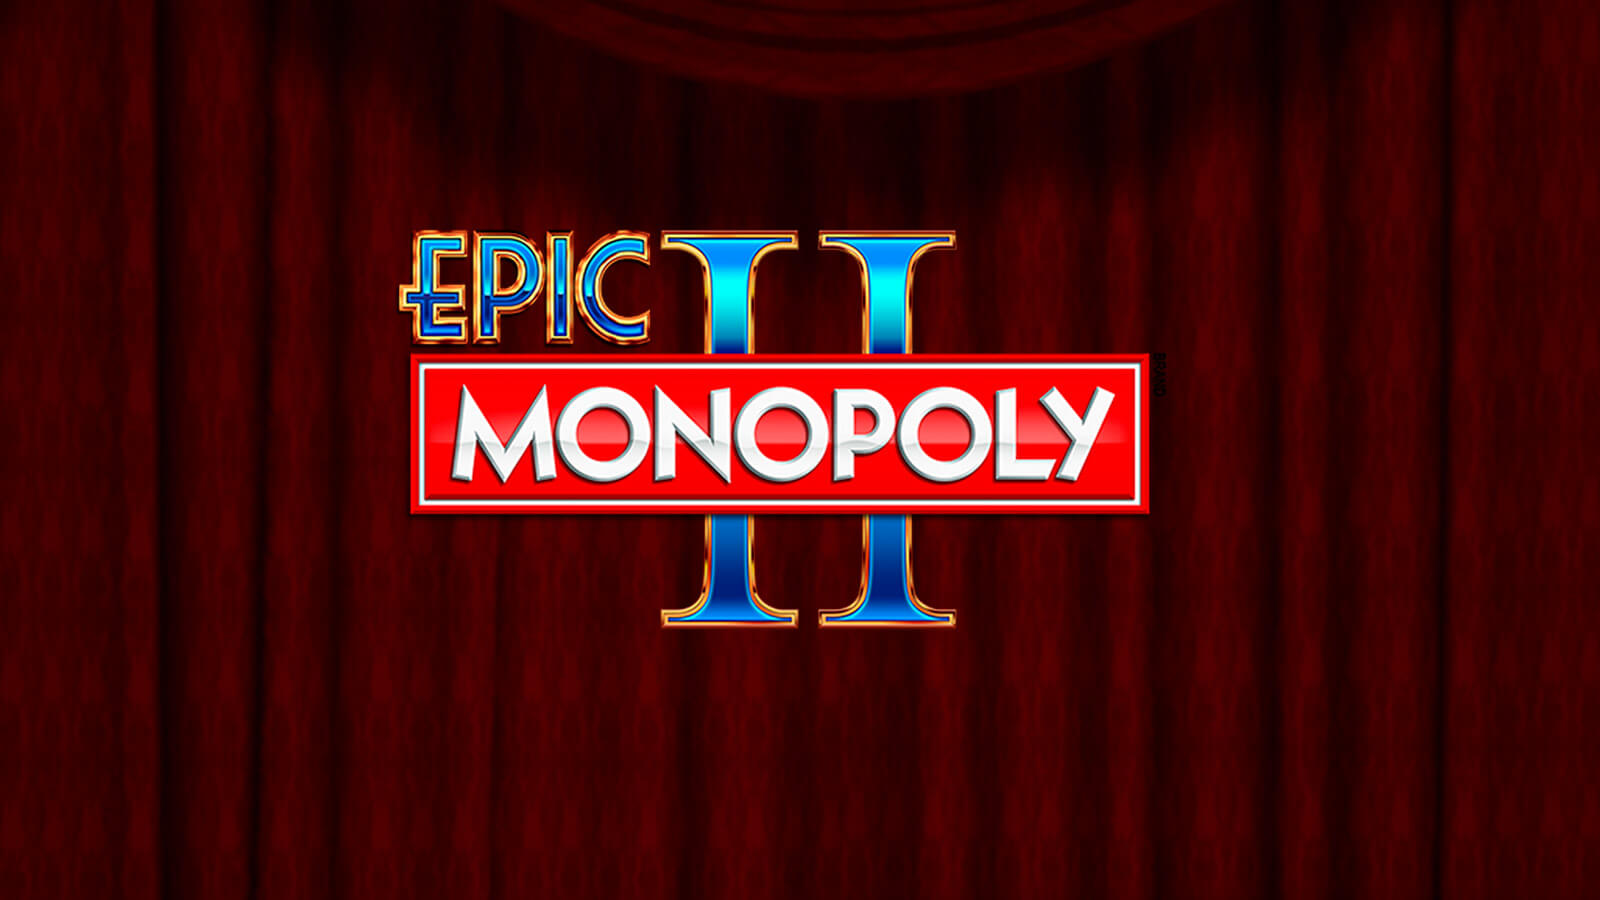 monopoly epic ii slot bonus